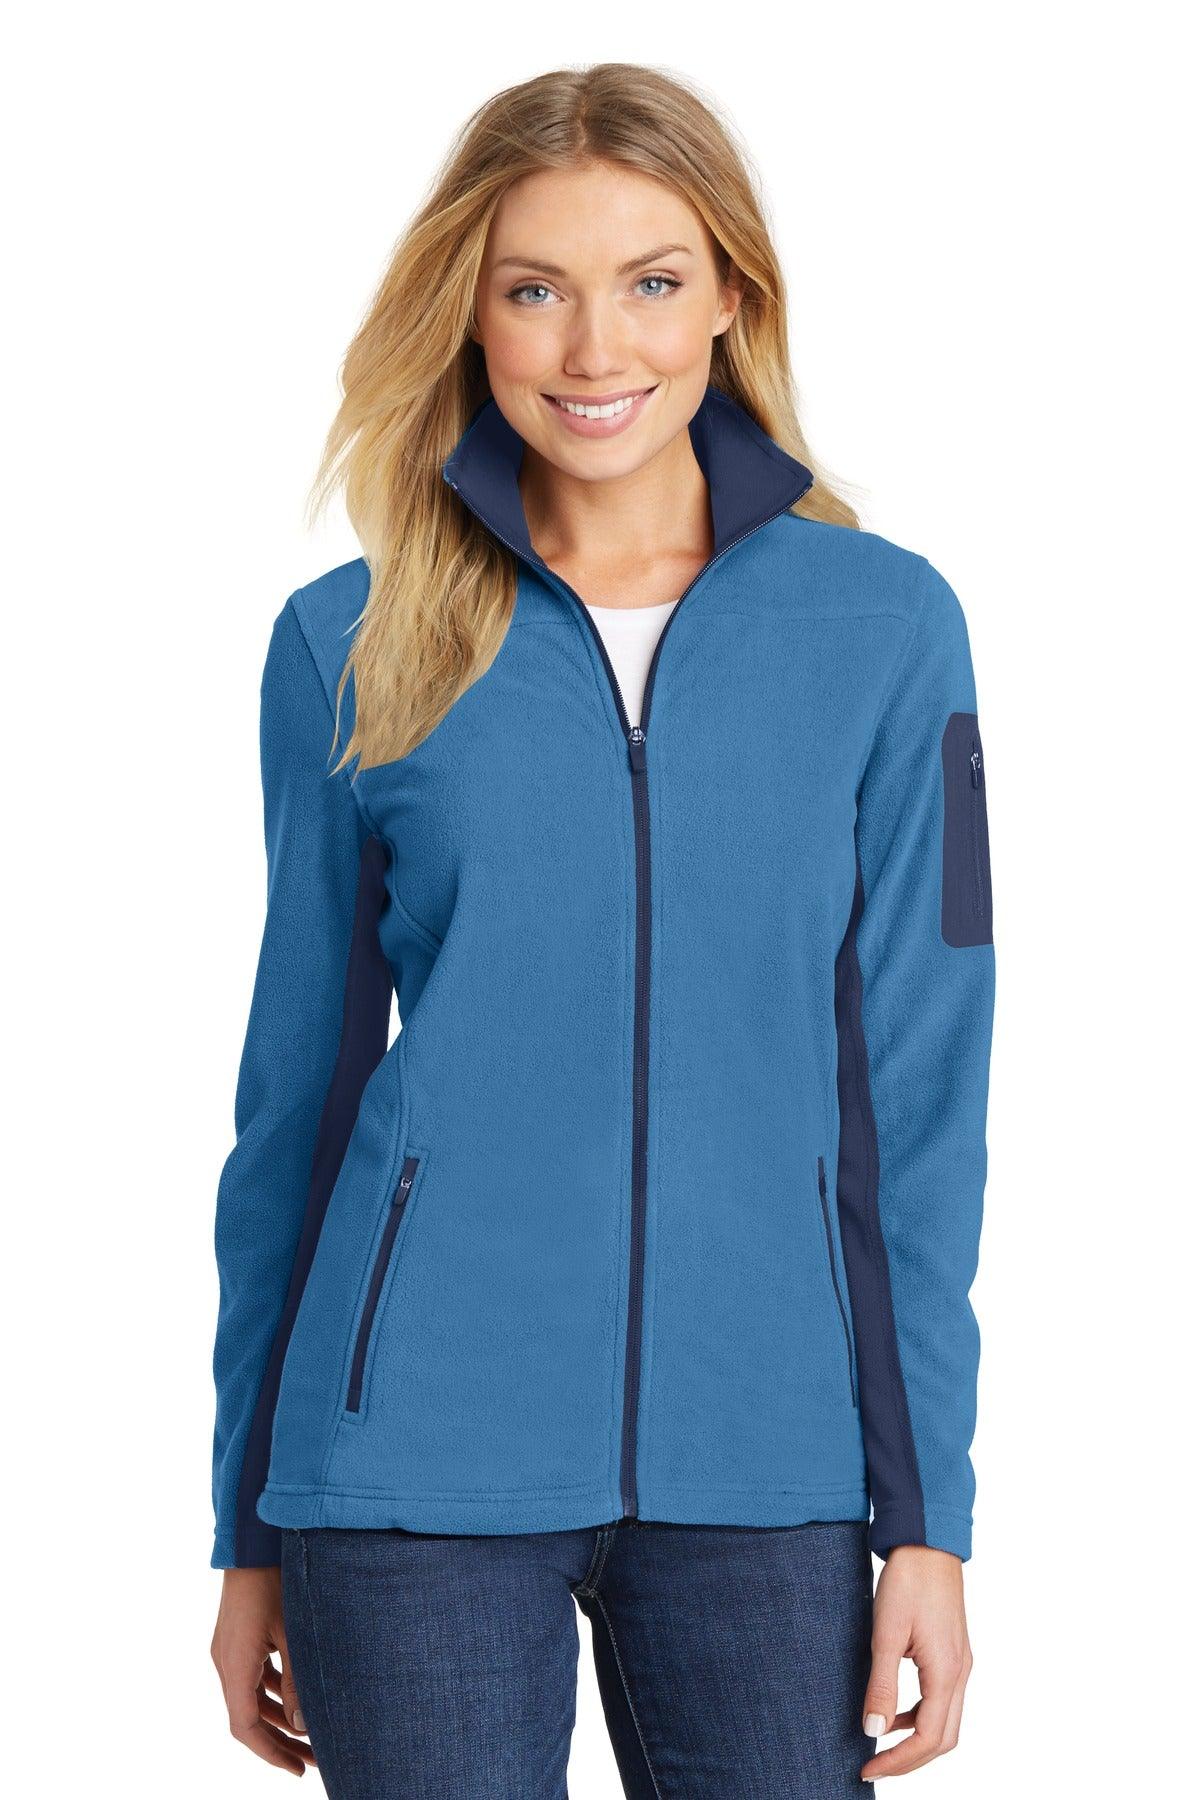 Port Authority Ladies Summit Fleece Full-Zip Jacket. L233 - Dresses Max